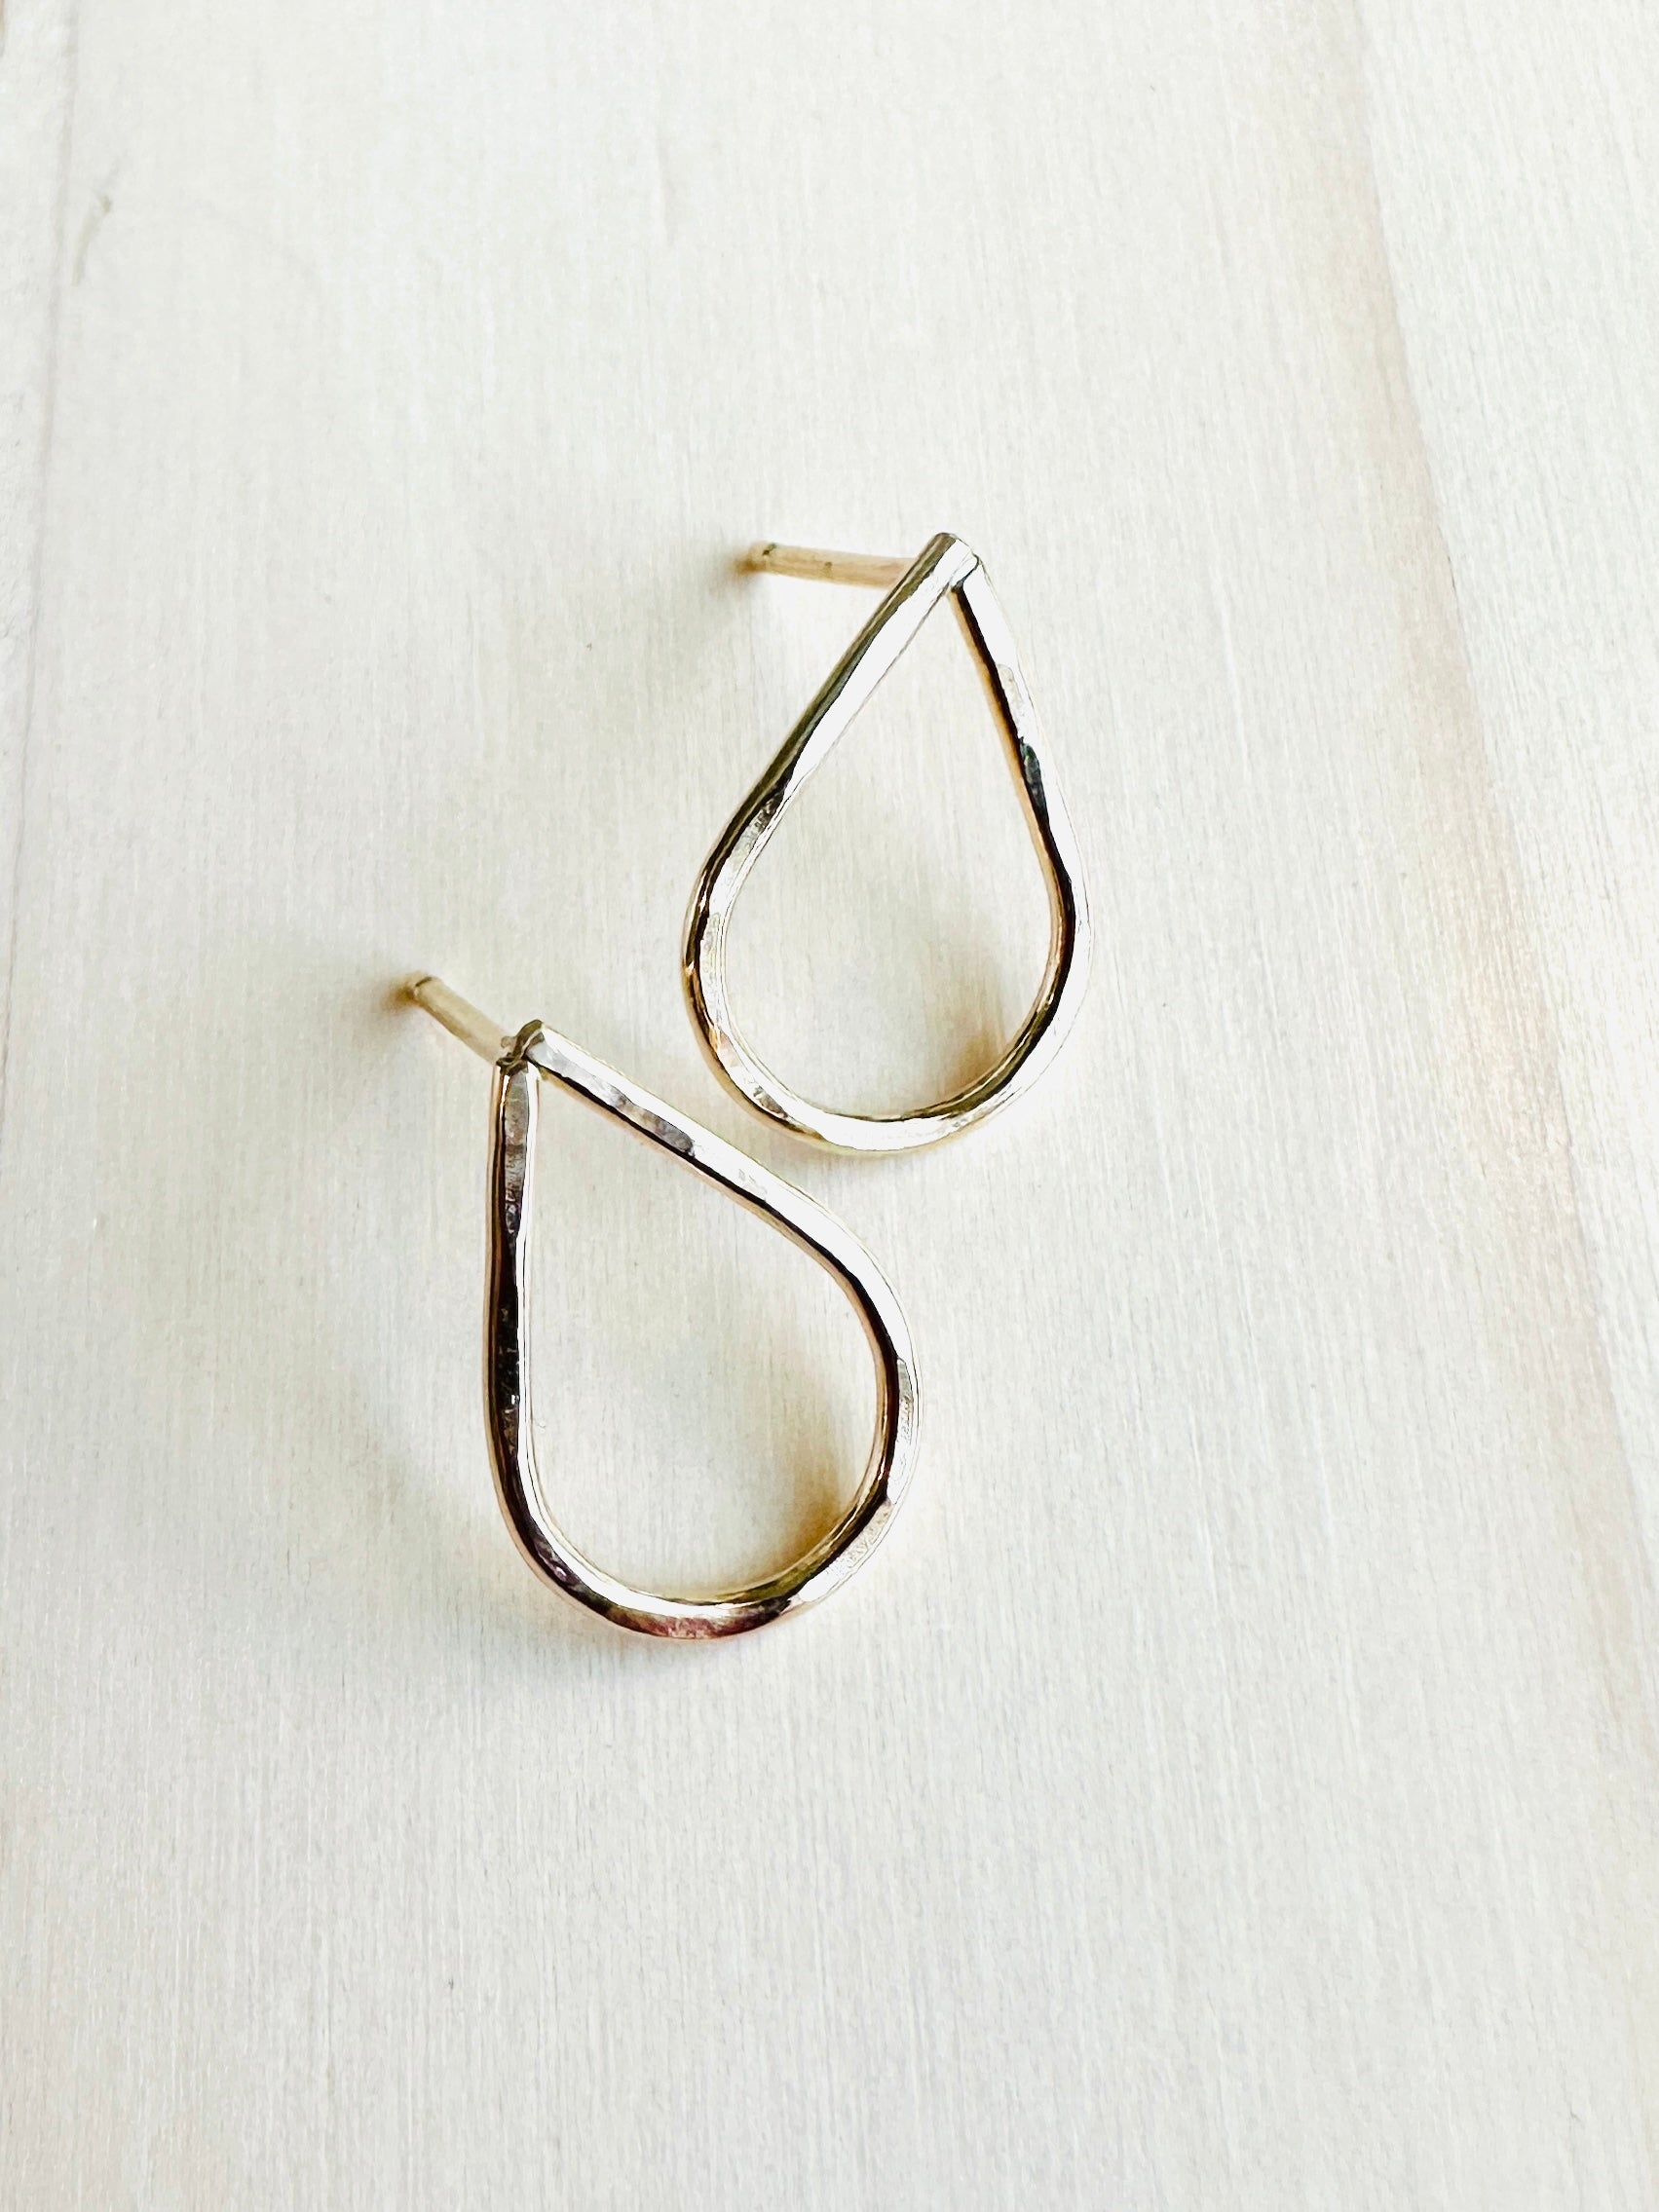 Hammered Gold Hoop Earrings Minimalist Gold Earrings Dainty 